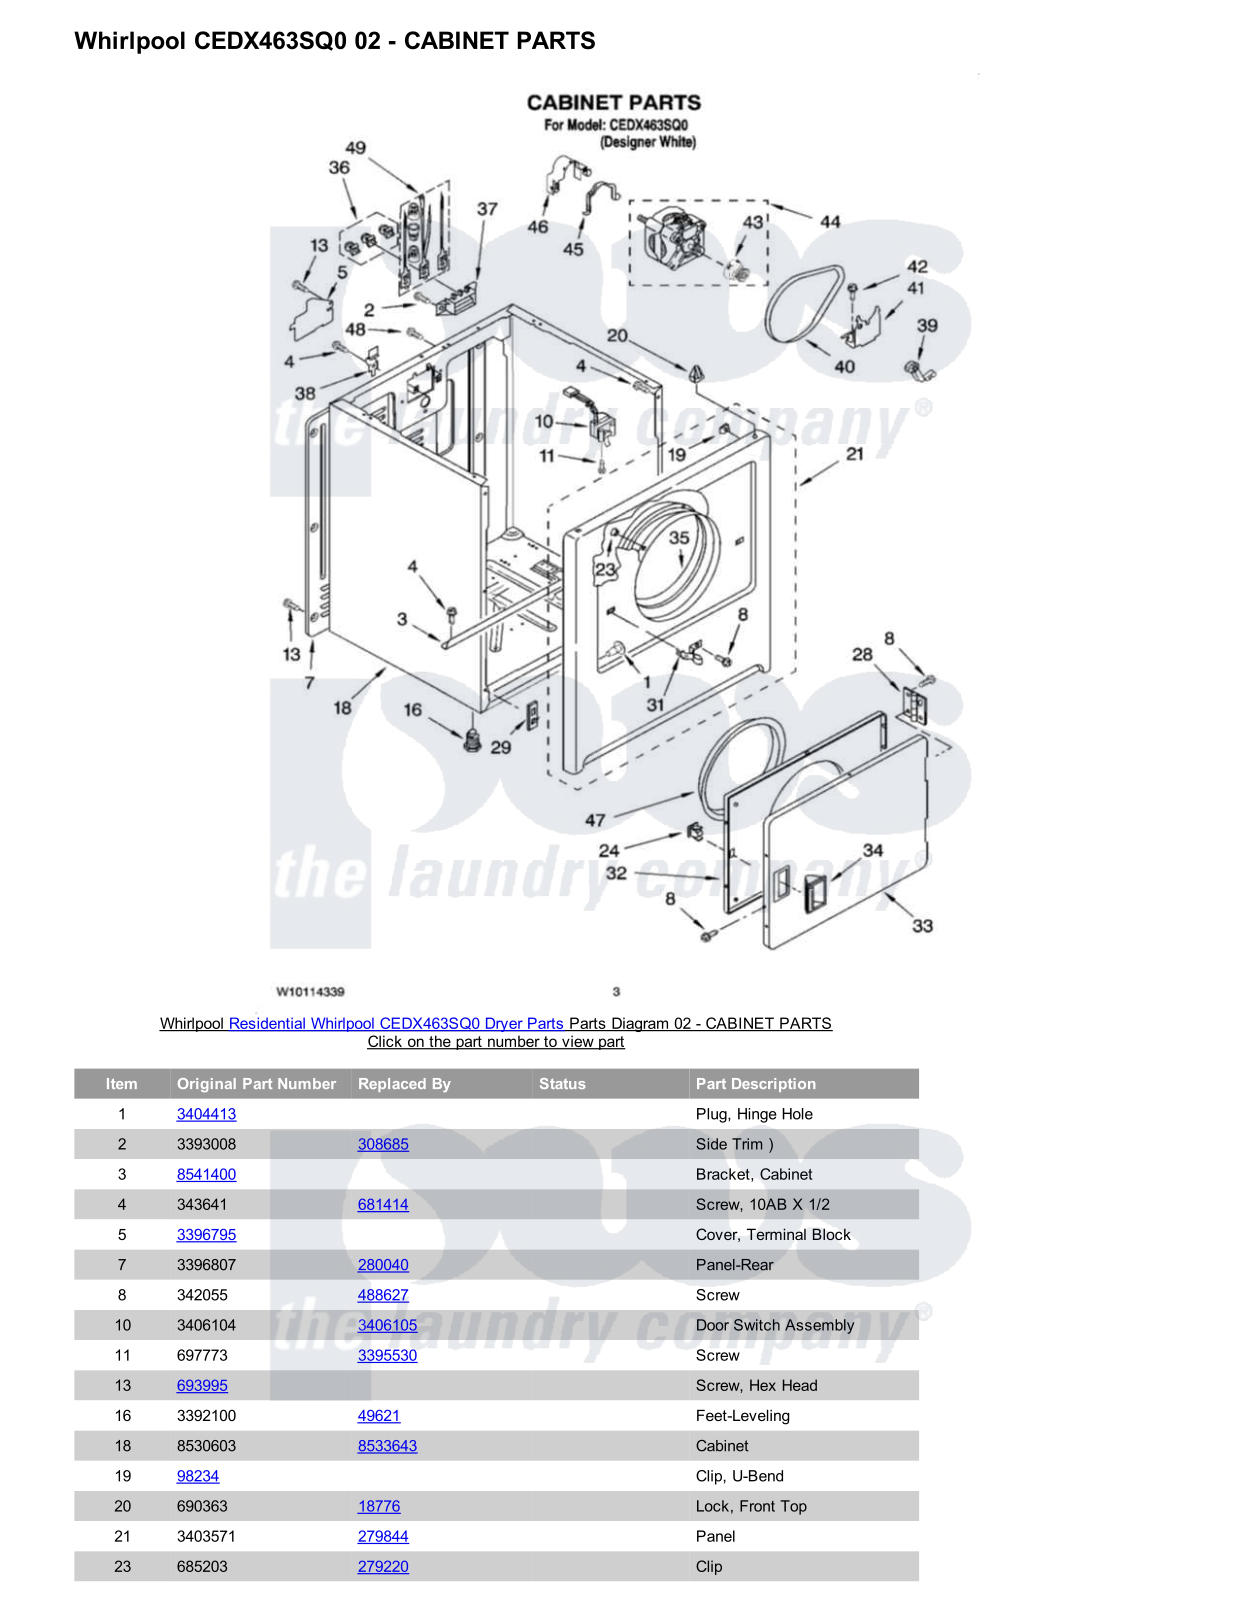 Whirlpool CEDX463SQ0 Parts Diagram